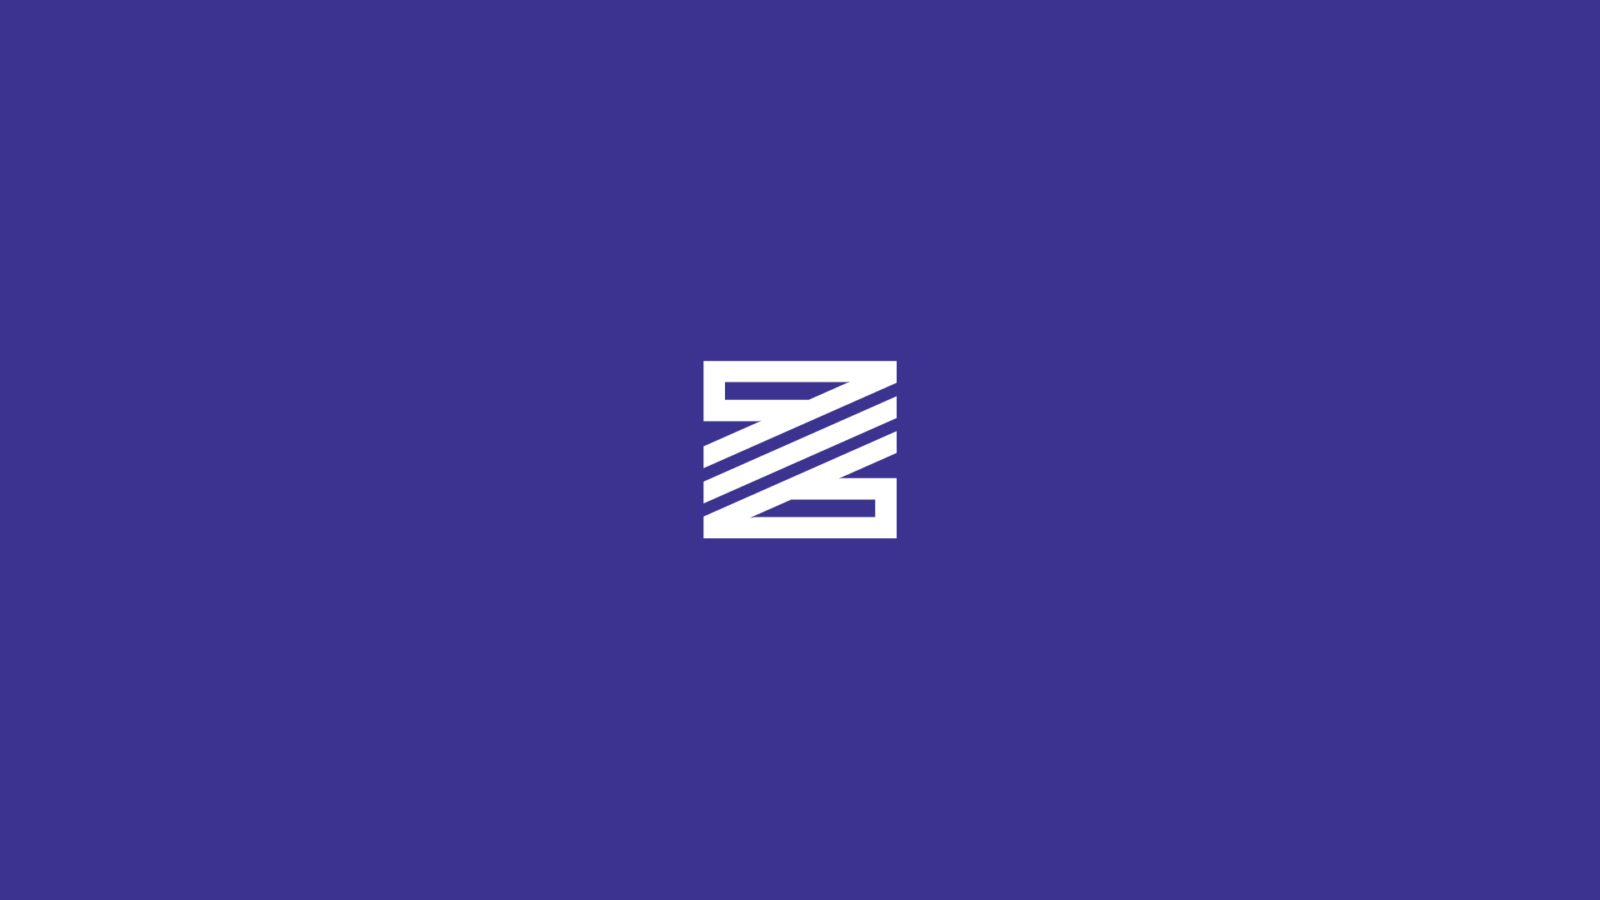 A Brand Identity for Zipie by Bullhorn Creative